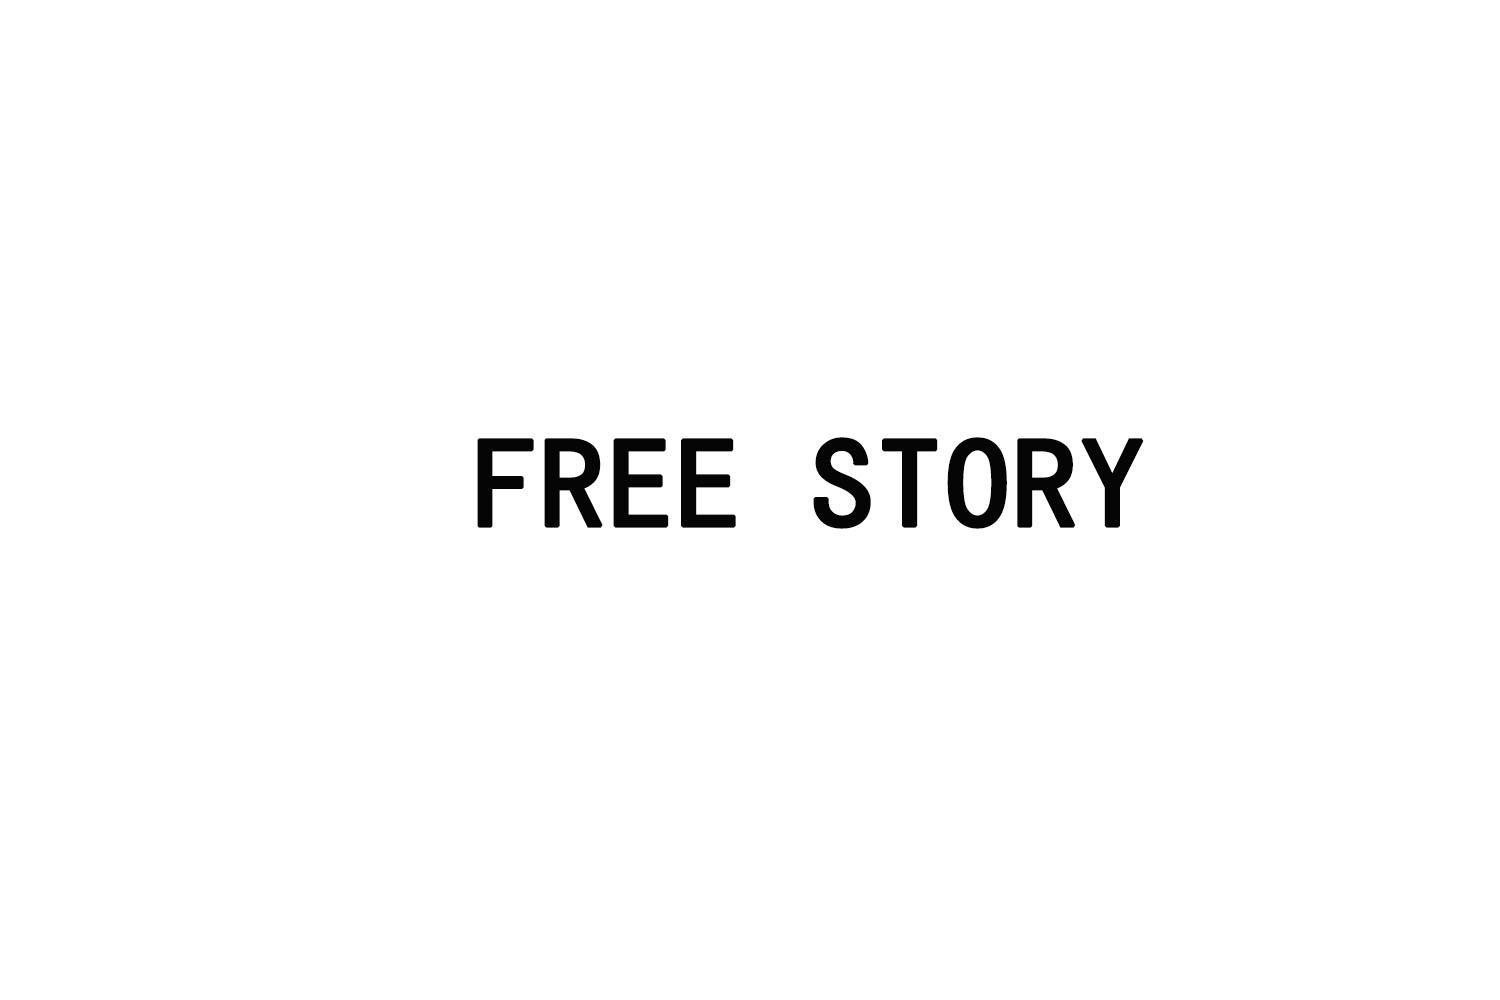 FREE STORY